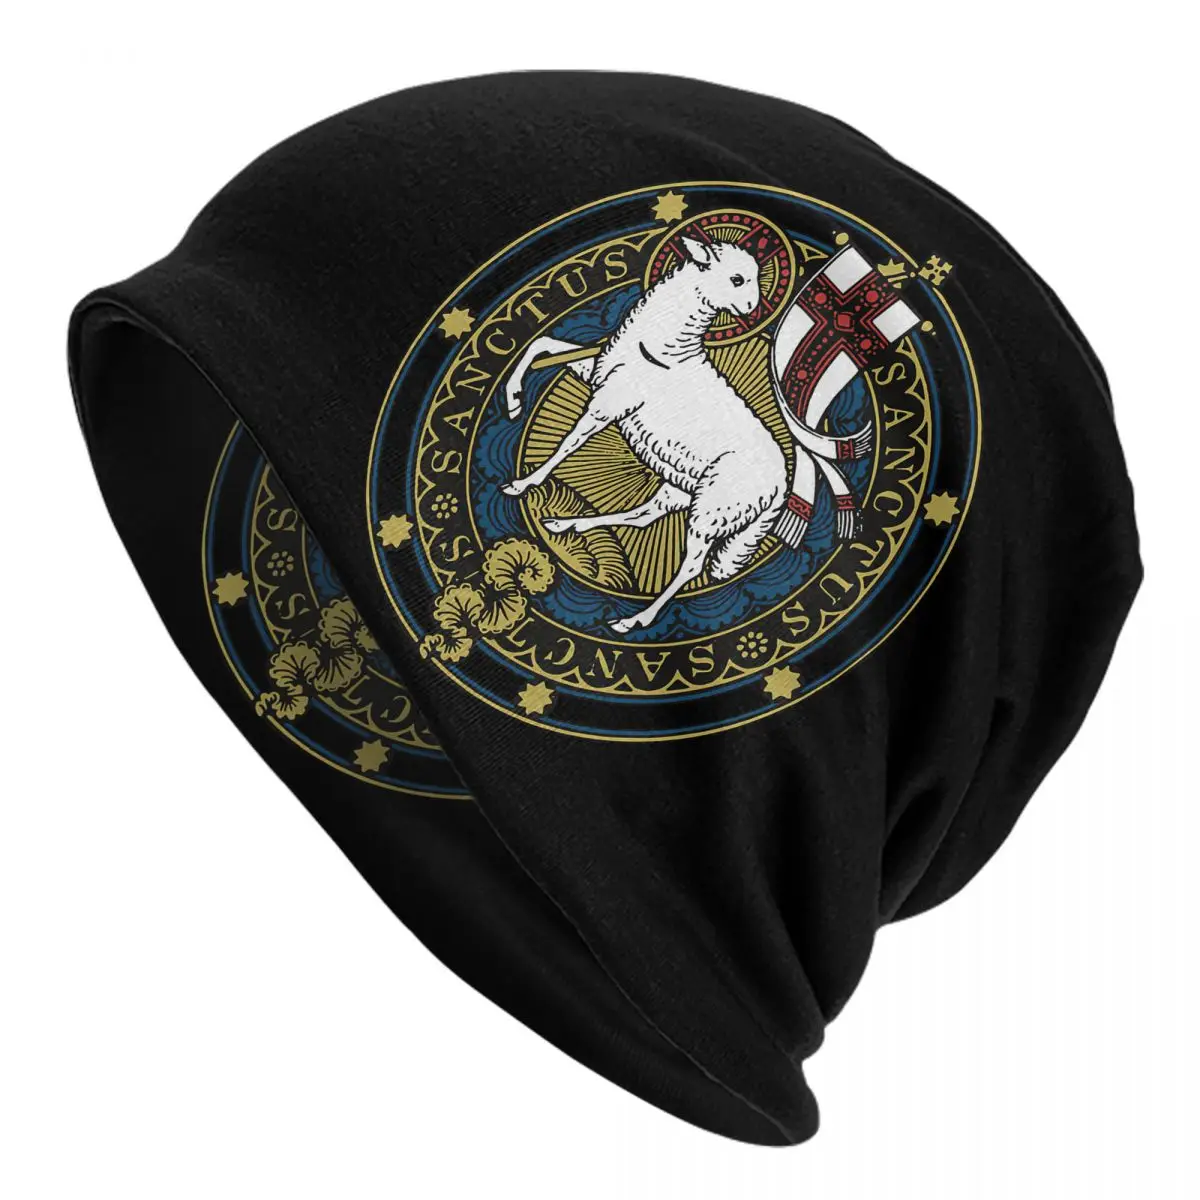 Agnus Dei Lamb Of God Adult Men's Women's Knit Hat Keep warm winter Funny knitted hat